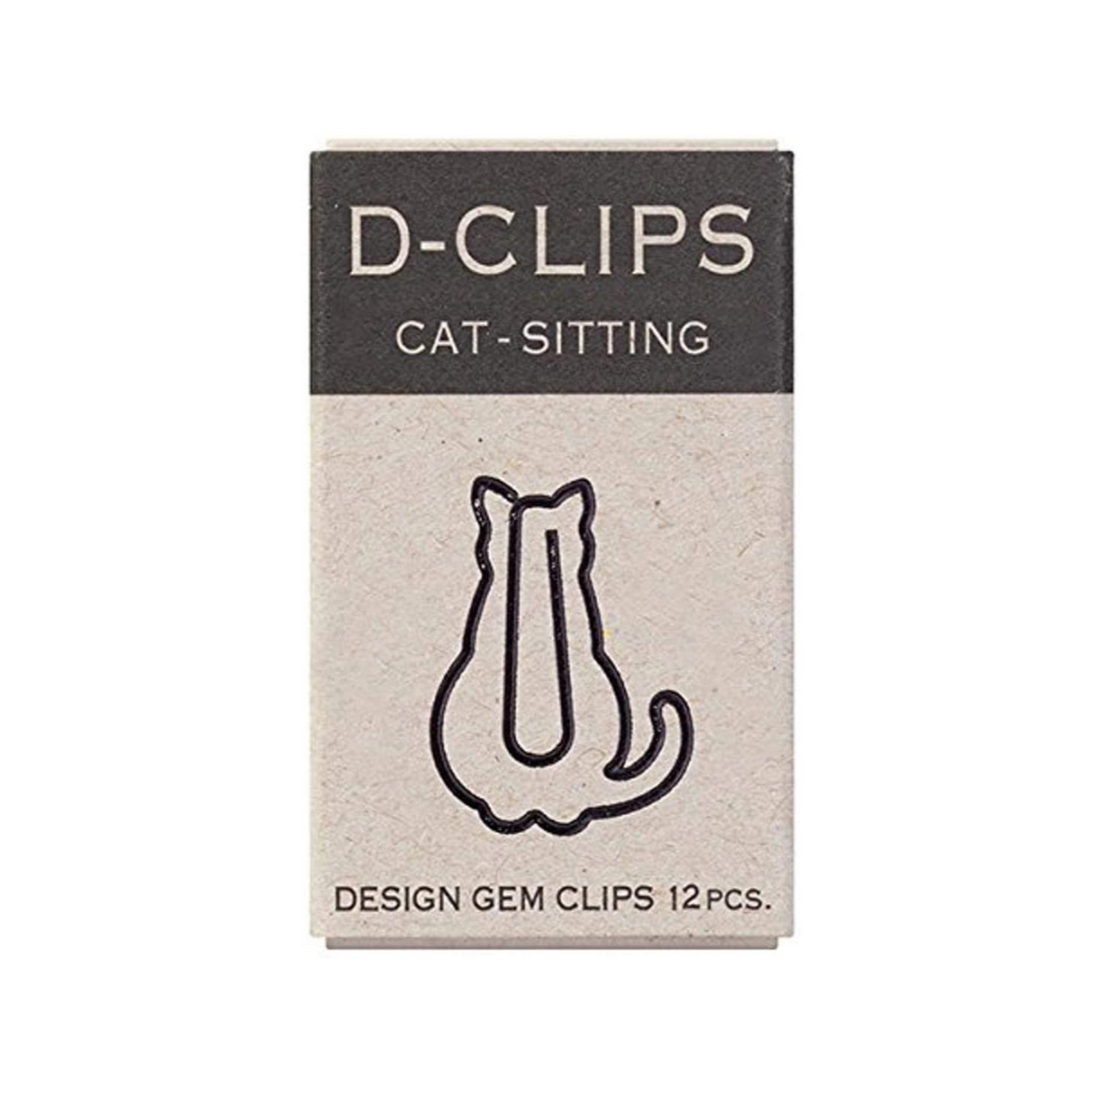 Sitting Cat D-Clips